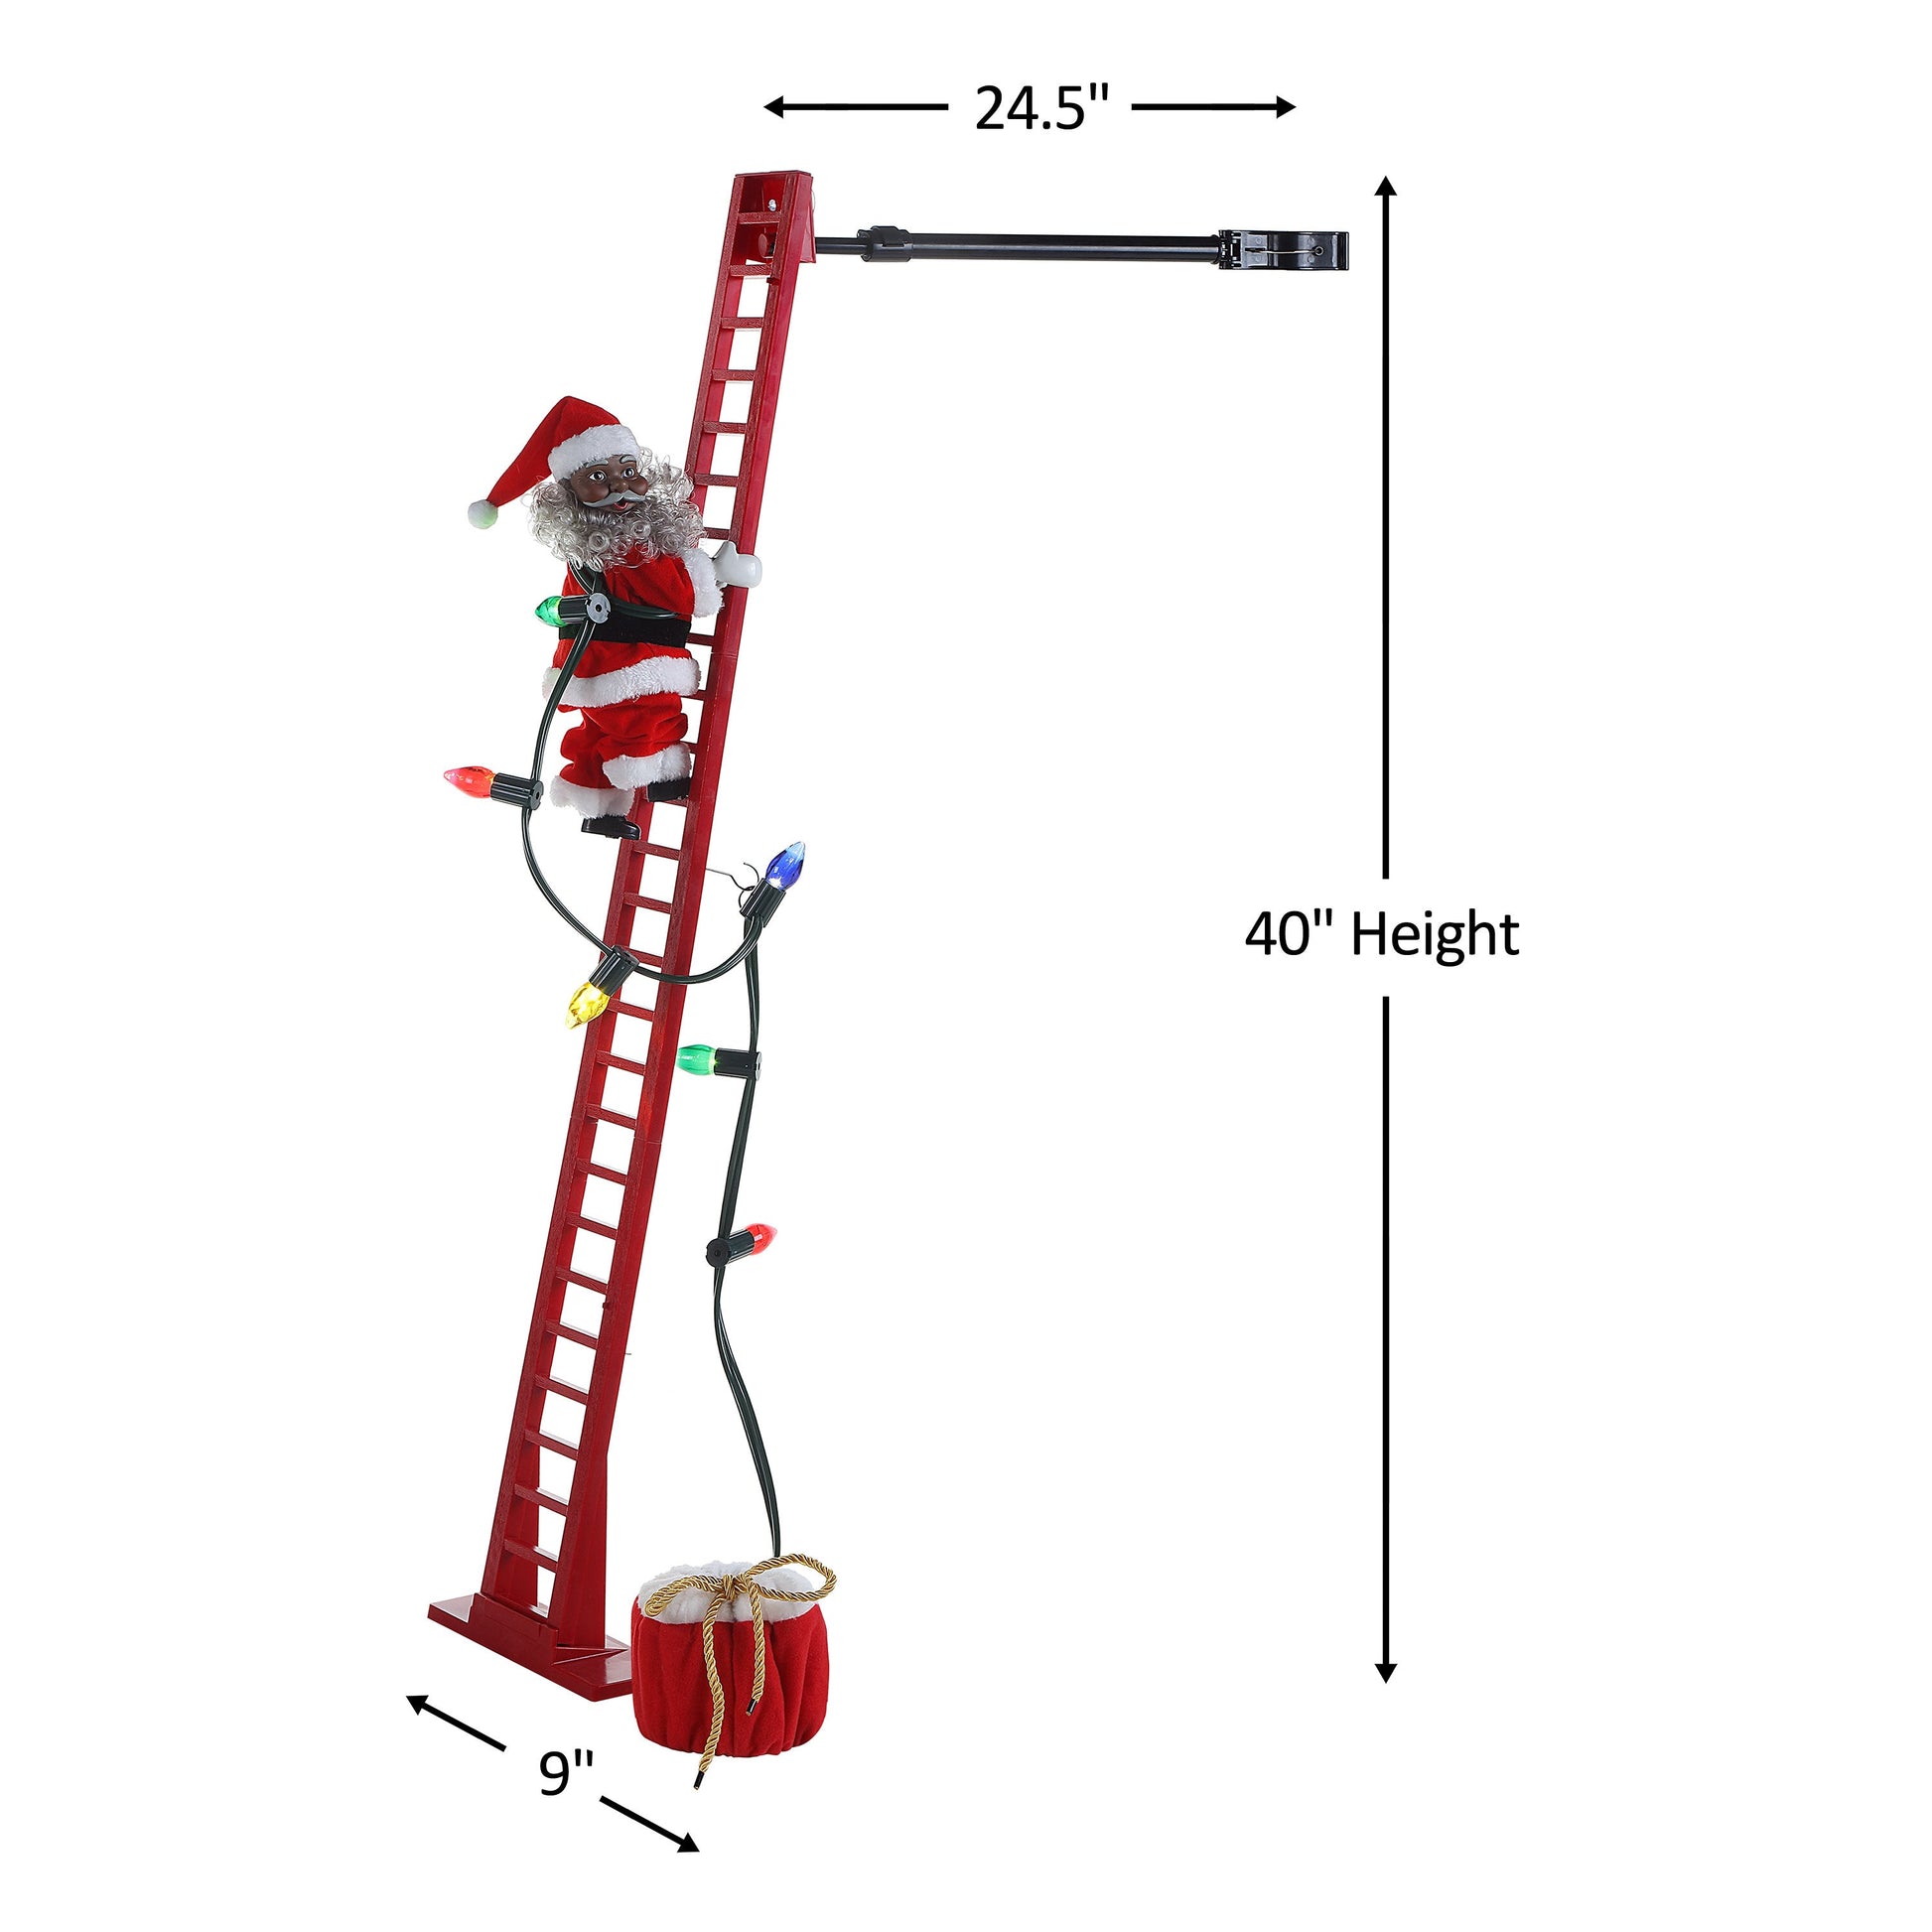 43" Animated Super Climbing Sculpted Black Santa